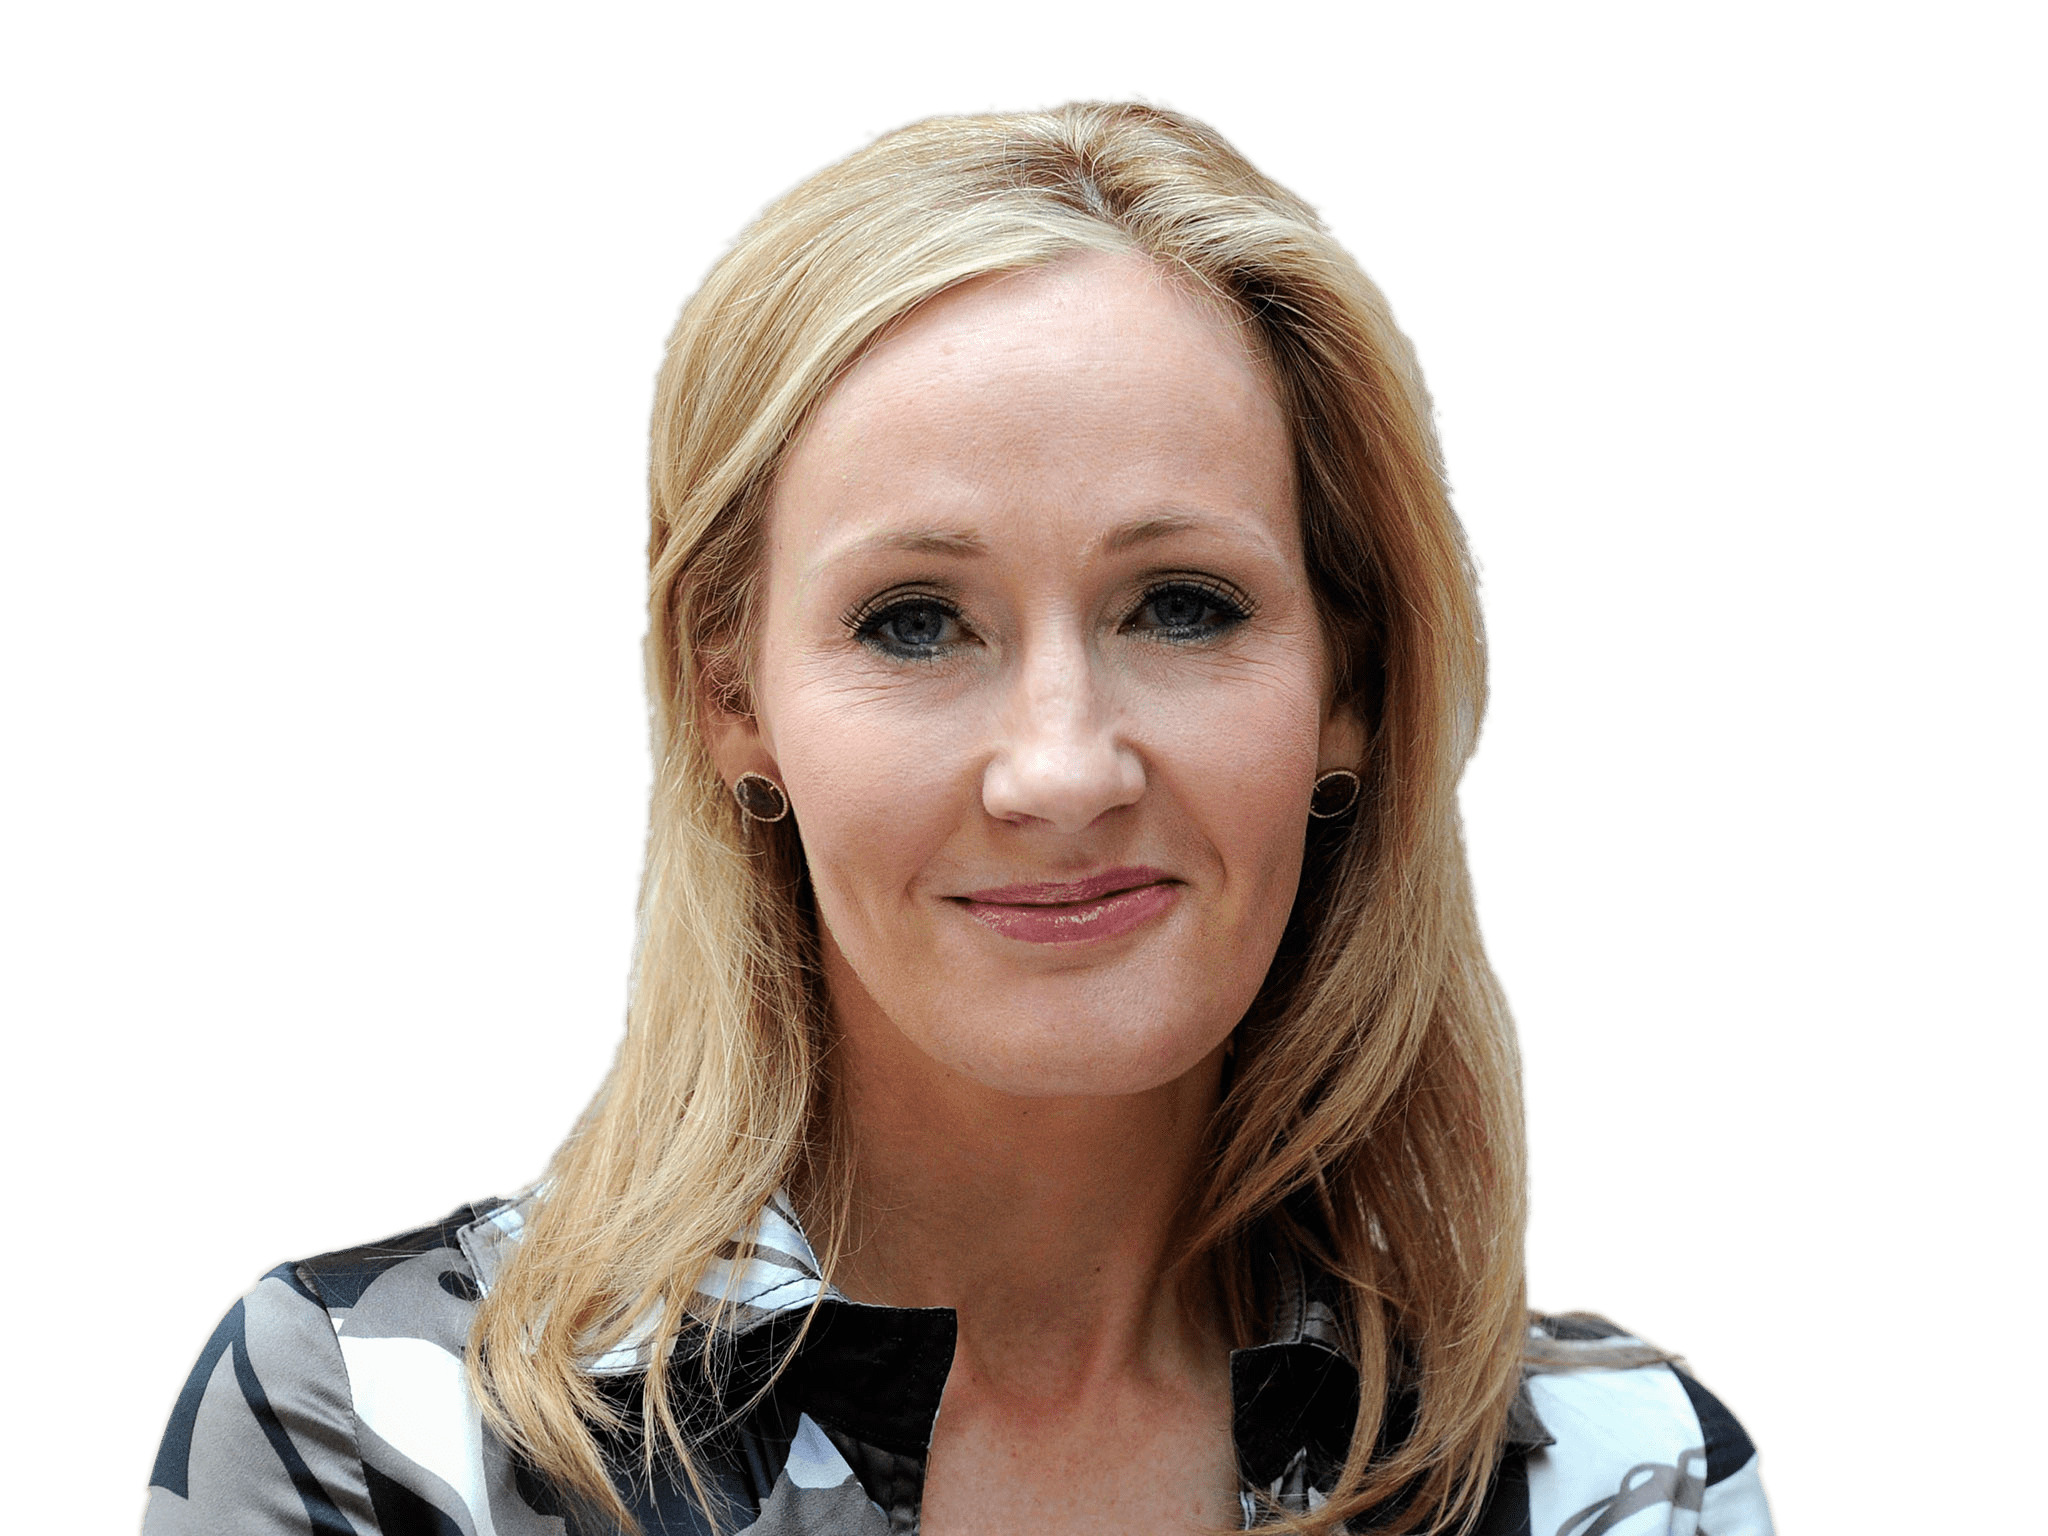 JK Rowling Portrait icons